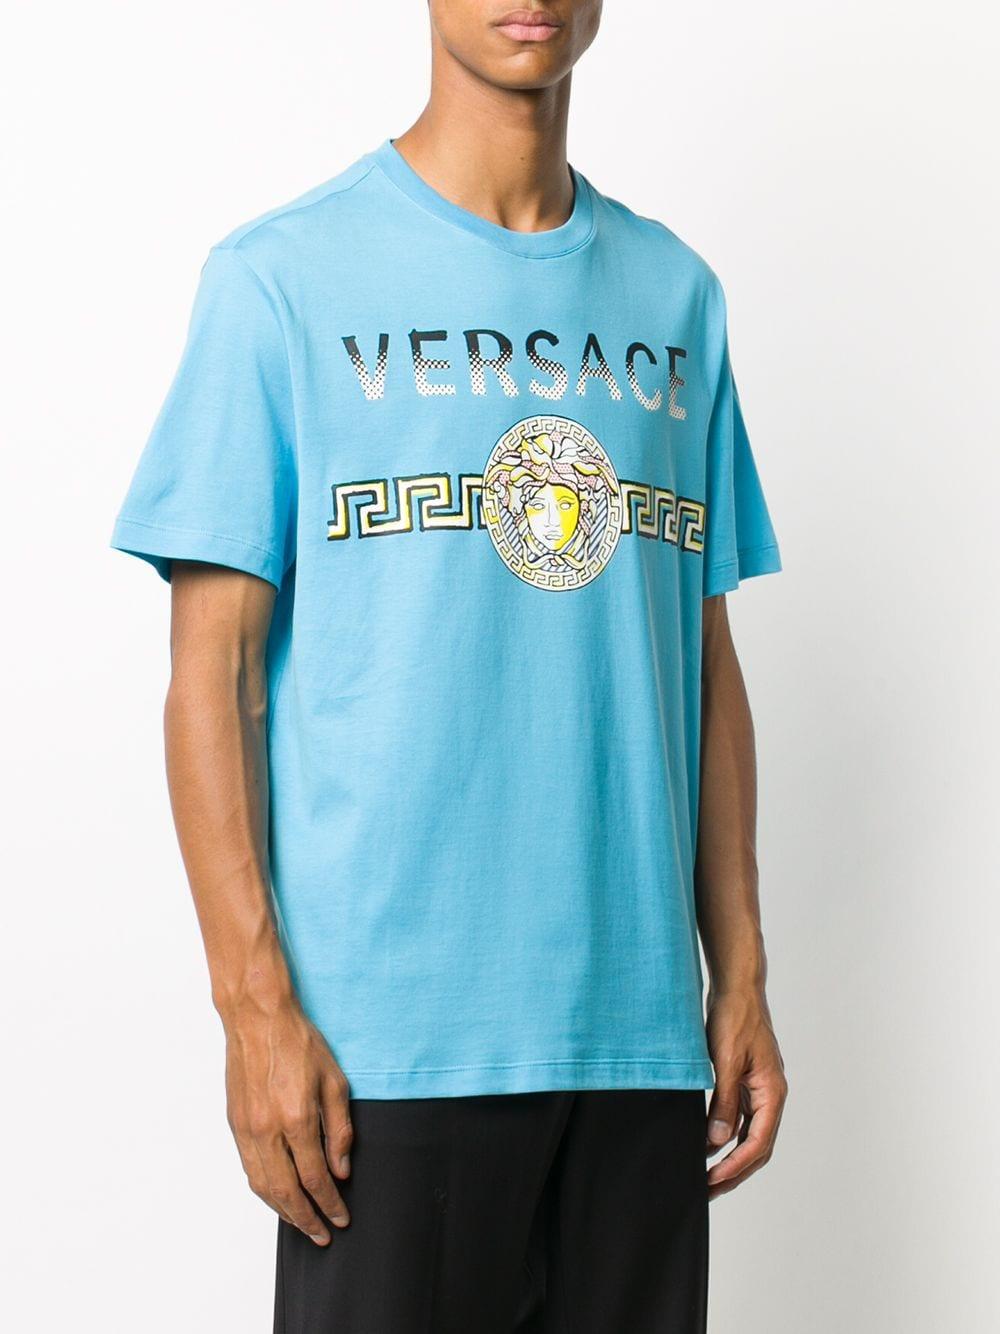 Versace Cotton Medusa Logo T-shirt in Blue for Men - Lyst